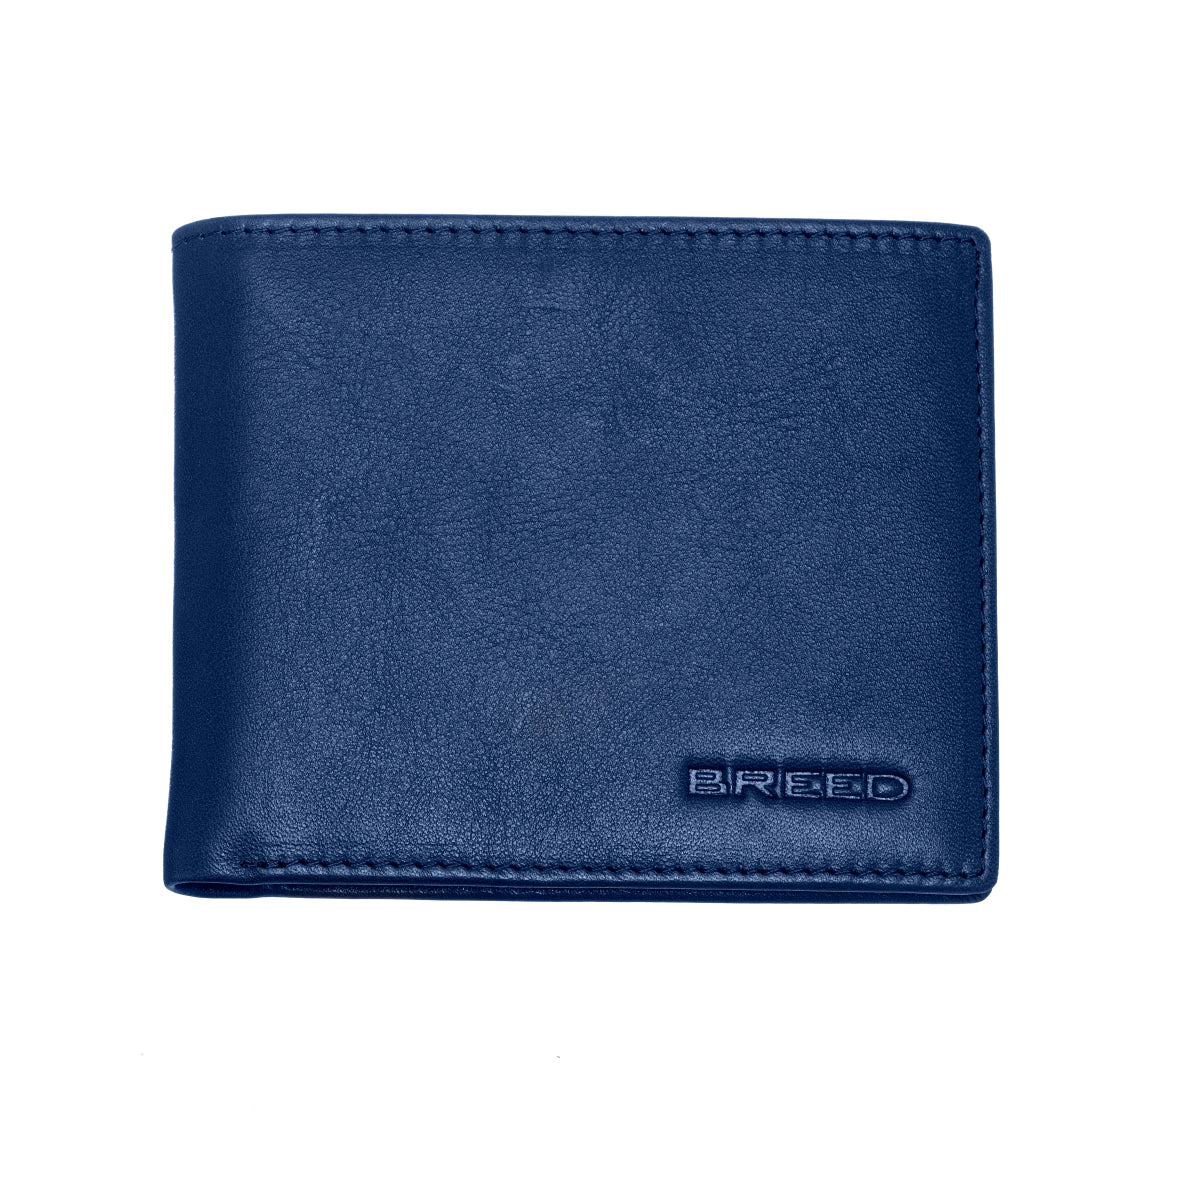 Bridle Leather Bi-Fold Wallet